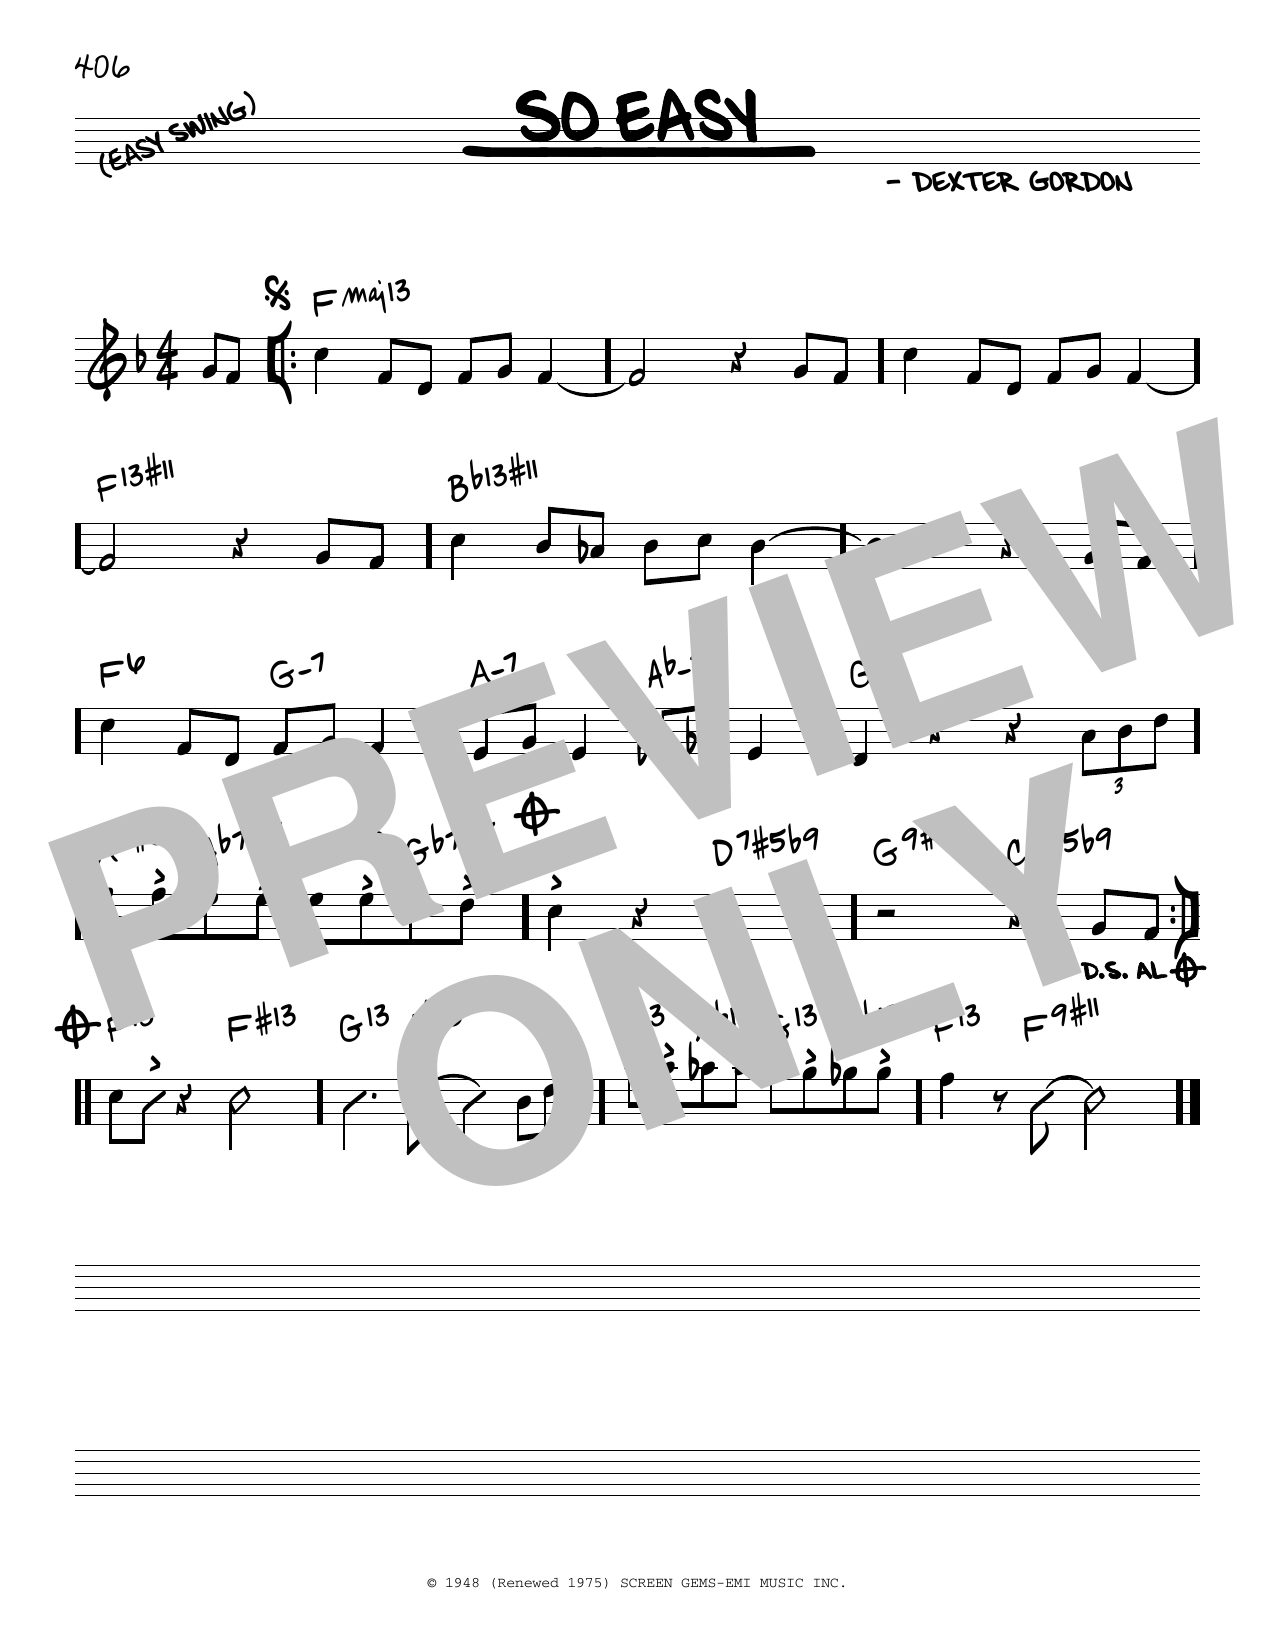 Download Dexter Gordon So Easy Sheet Music